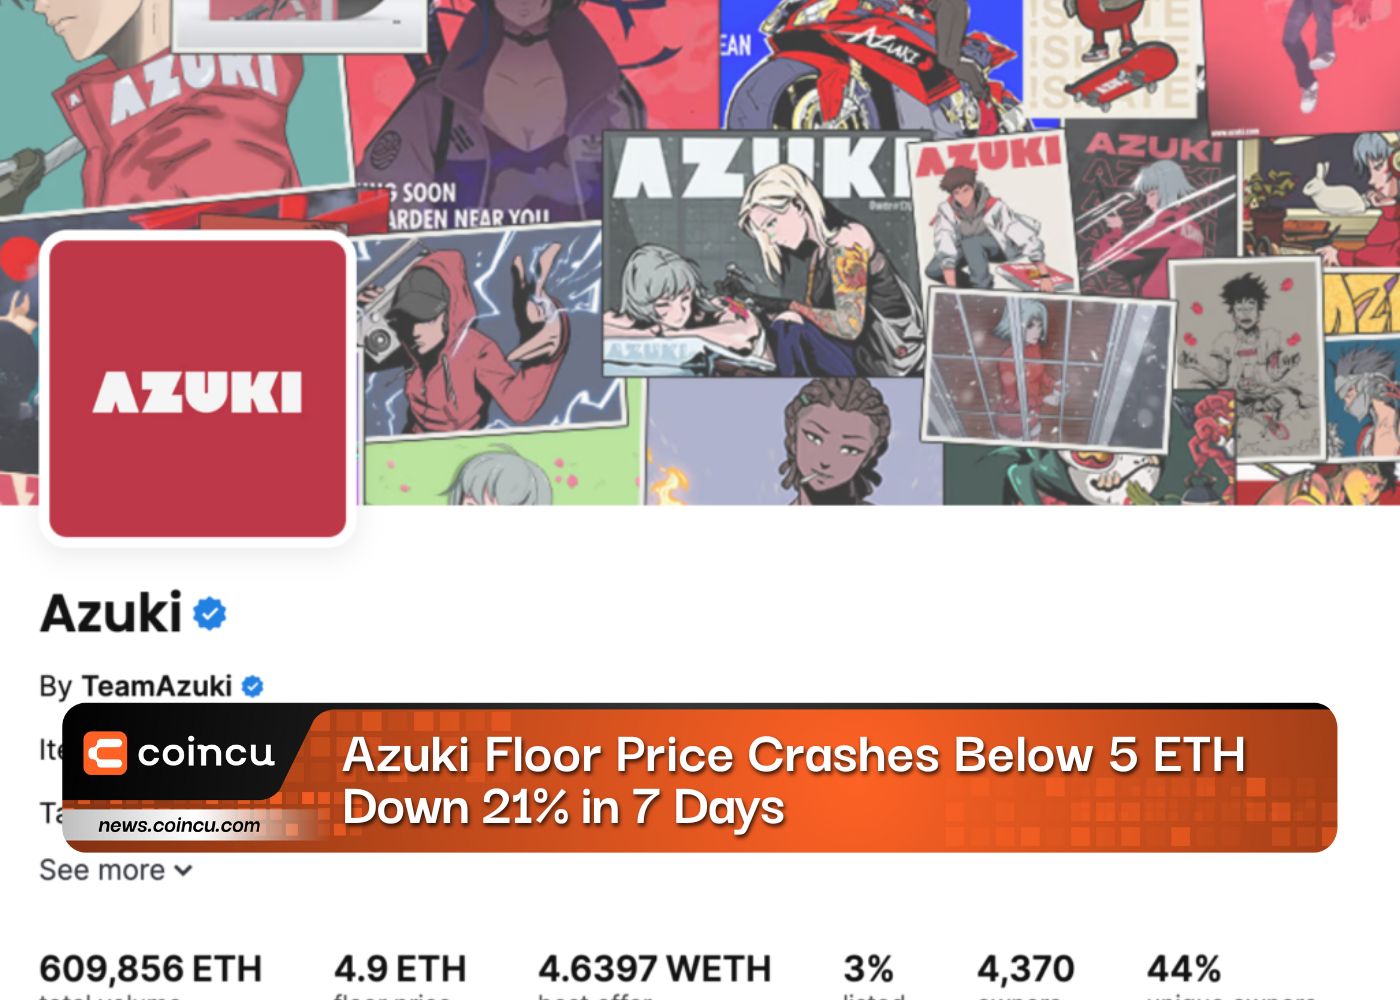 Azuki Floor Price Crashes Below 5 ETH